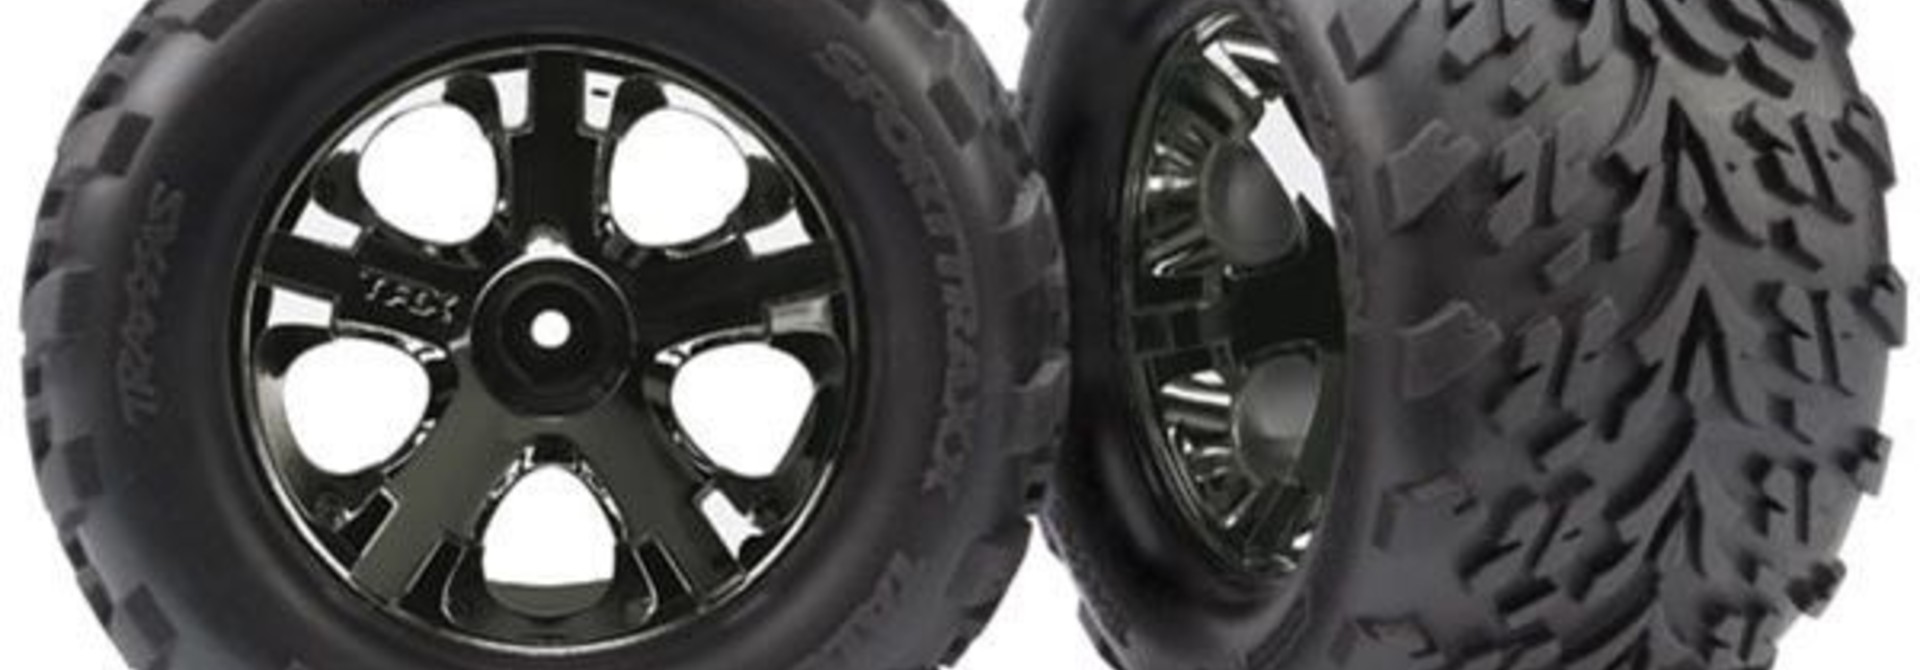 Tires & wheels, assembled, glued (2.8) (All-Star black chrom, TRX3669A